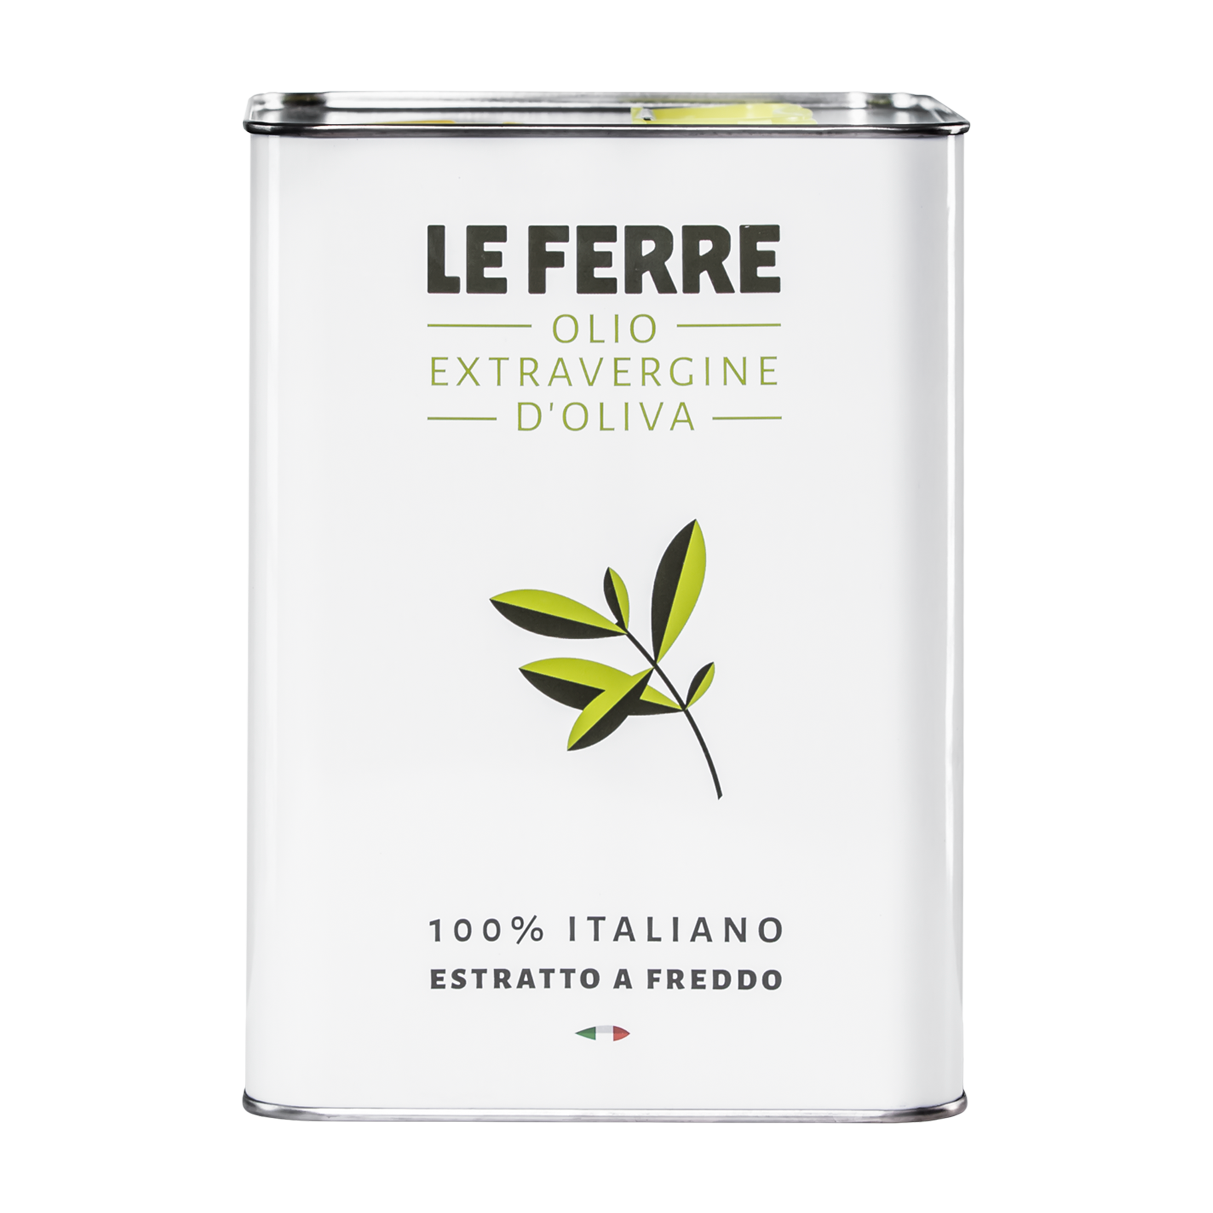 Le Ferre Italian Extra Virgin Olive Oil 3 litres tin